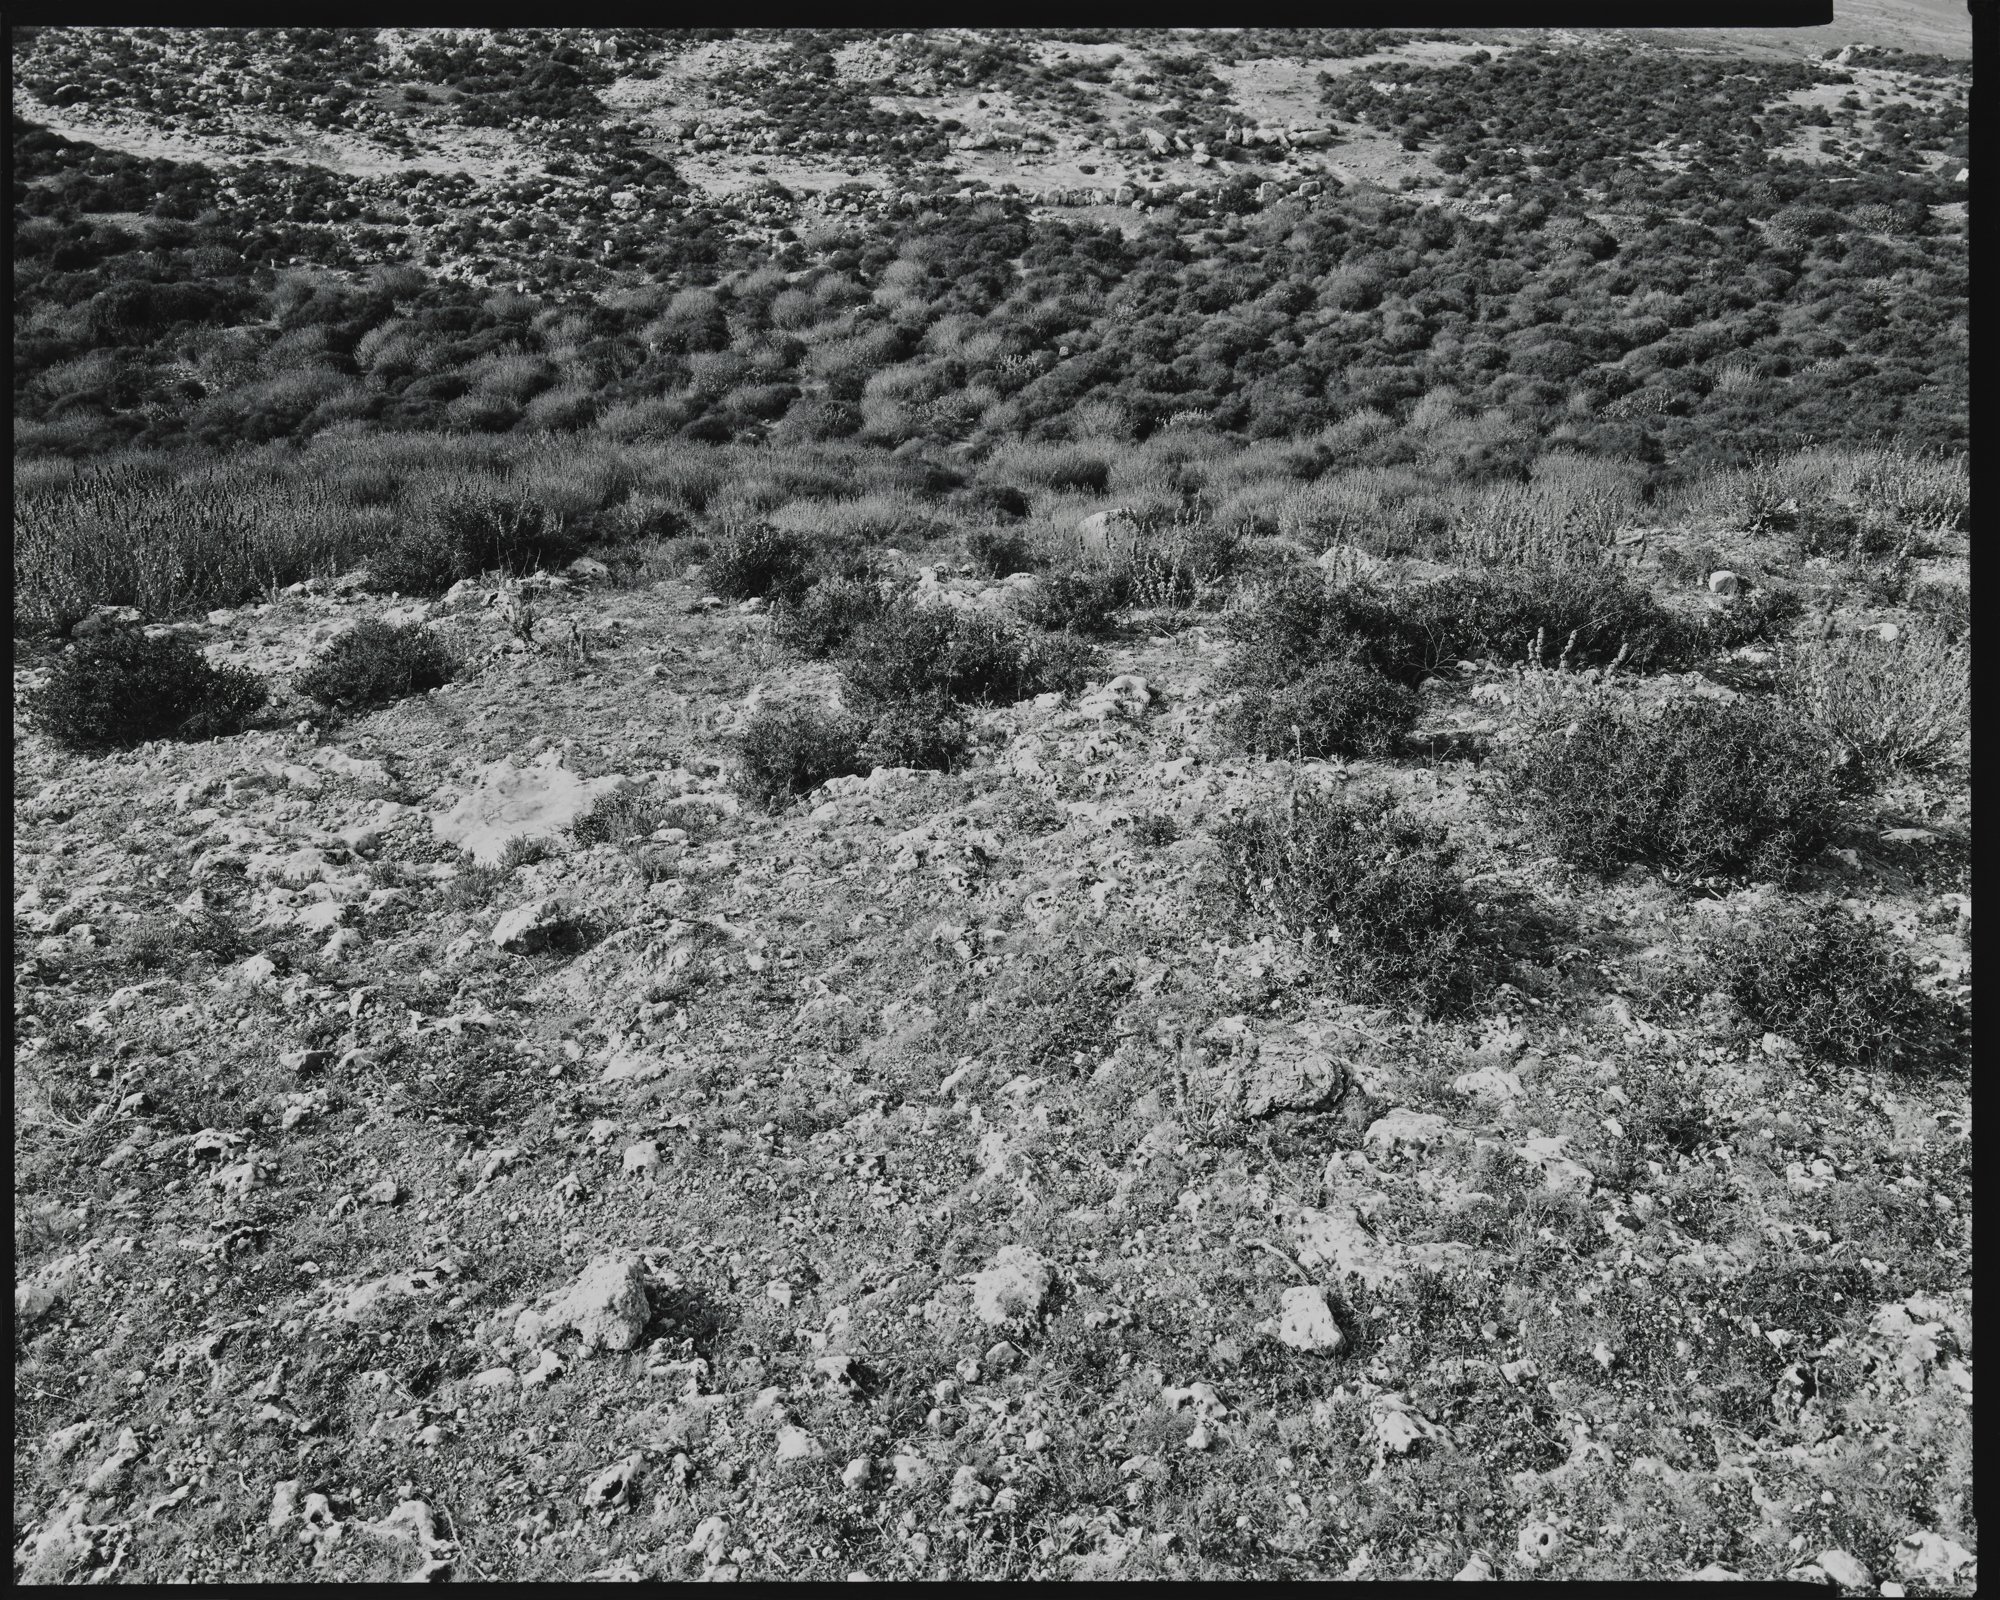 Cyrenaican Landscapes_Landscape (Three Stones), Shahat, Libya_1979 © Nick Merrick.jpg